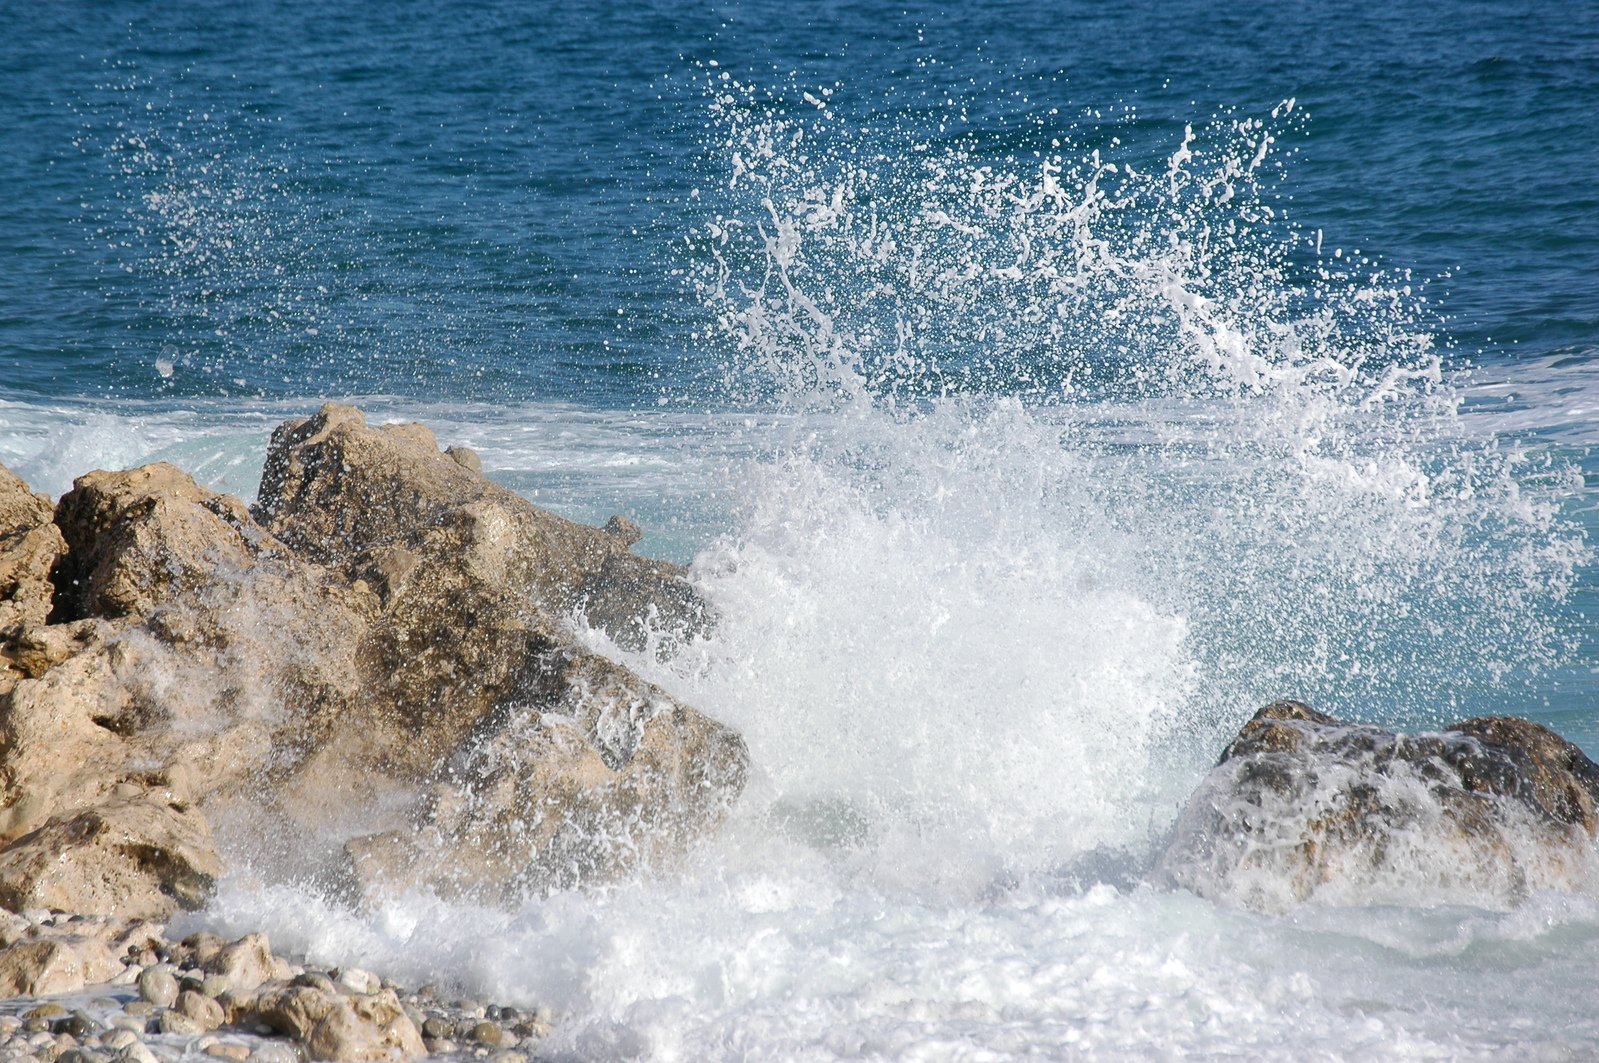 a crashing wave on rocks on the ocean